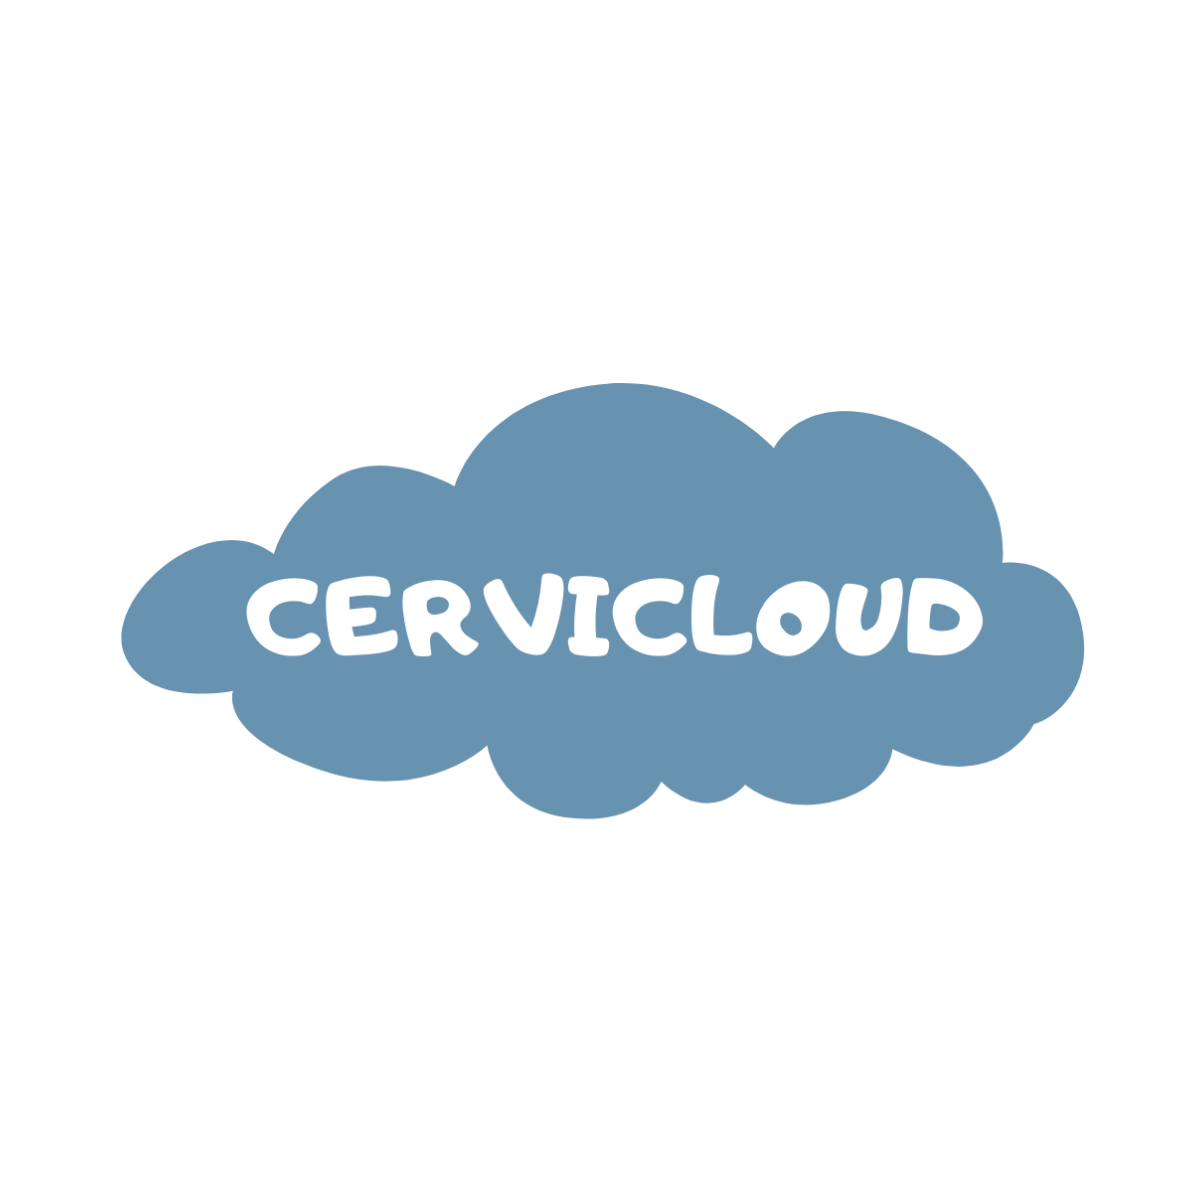 About Us section cervicloud cloud sleep pillow